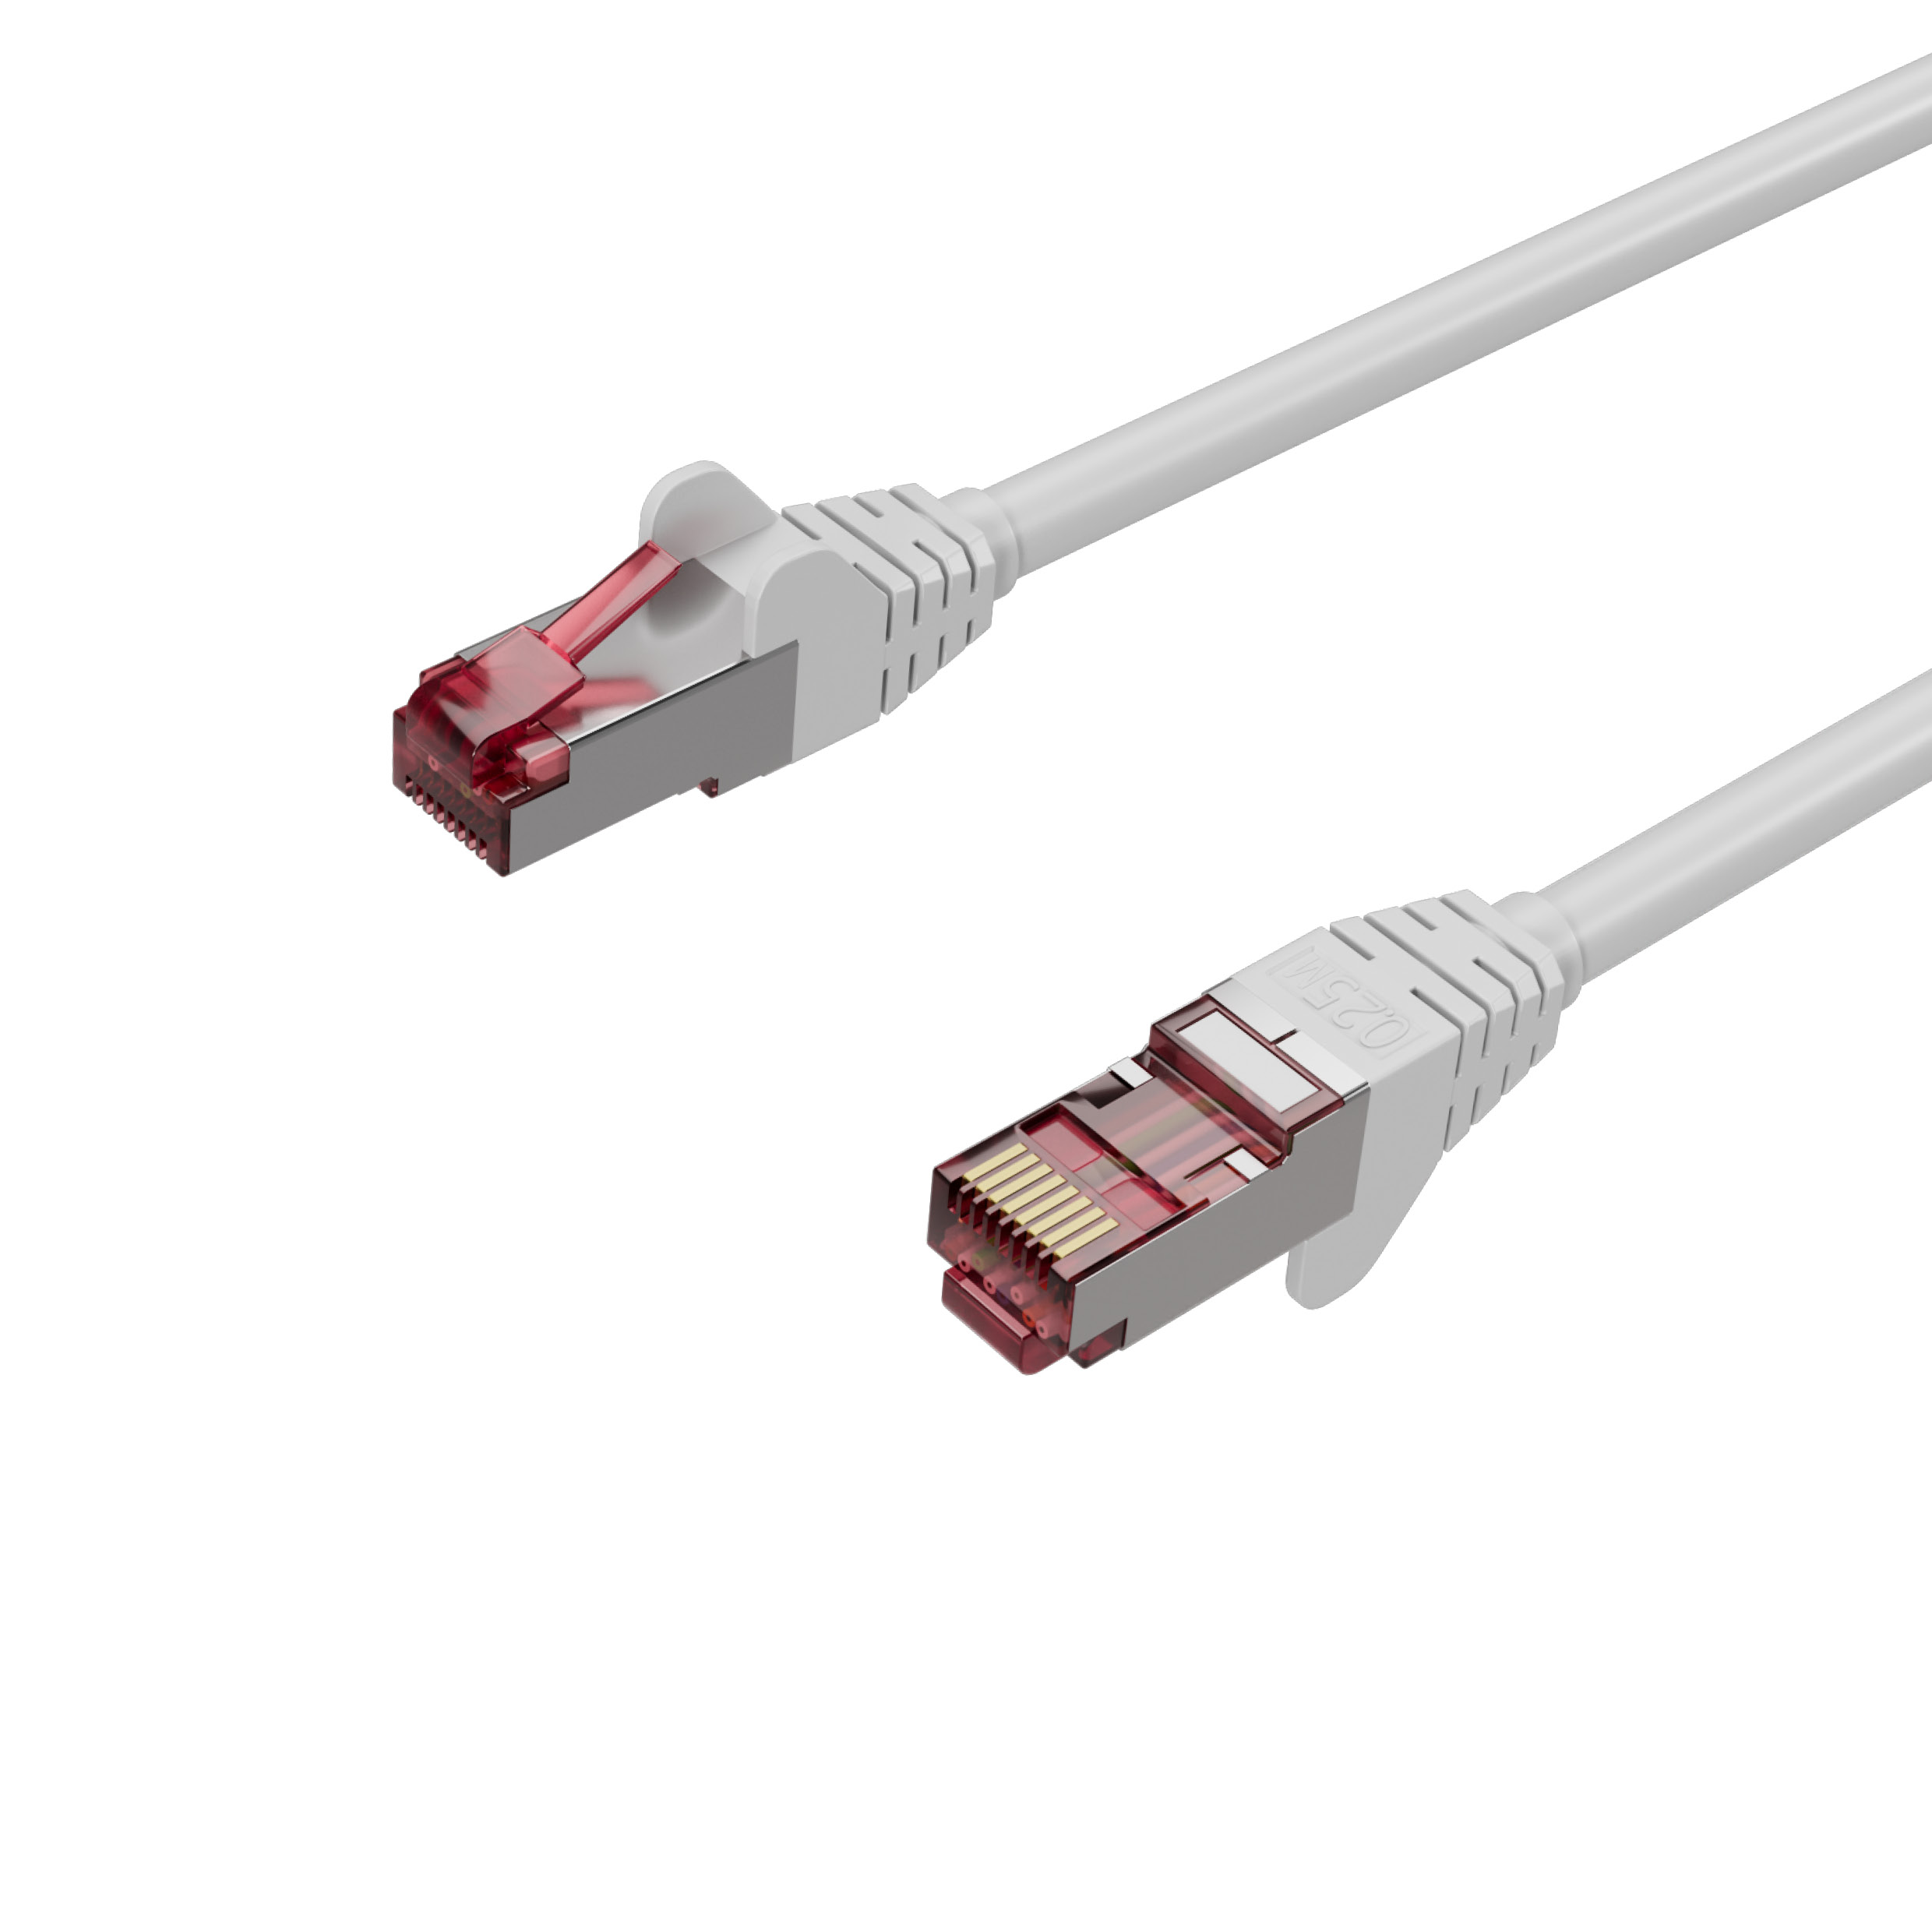 KABELBUDE Netzwerkkabel, RJ45 LAN, S/FTP, Weiß m Cat PIMF, Cat Ethernet Netzwerkkabel 5,00m, GHMT Halogenfrei, 6A, 6A, 5